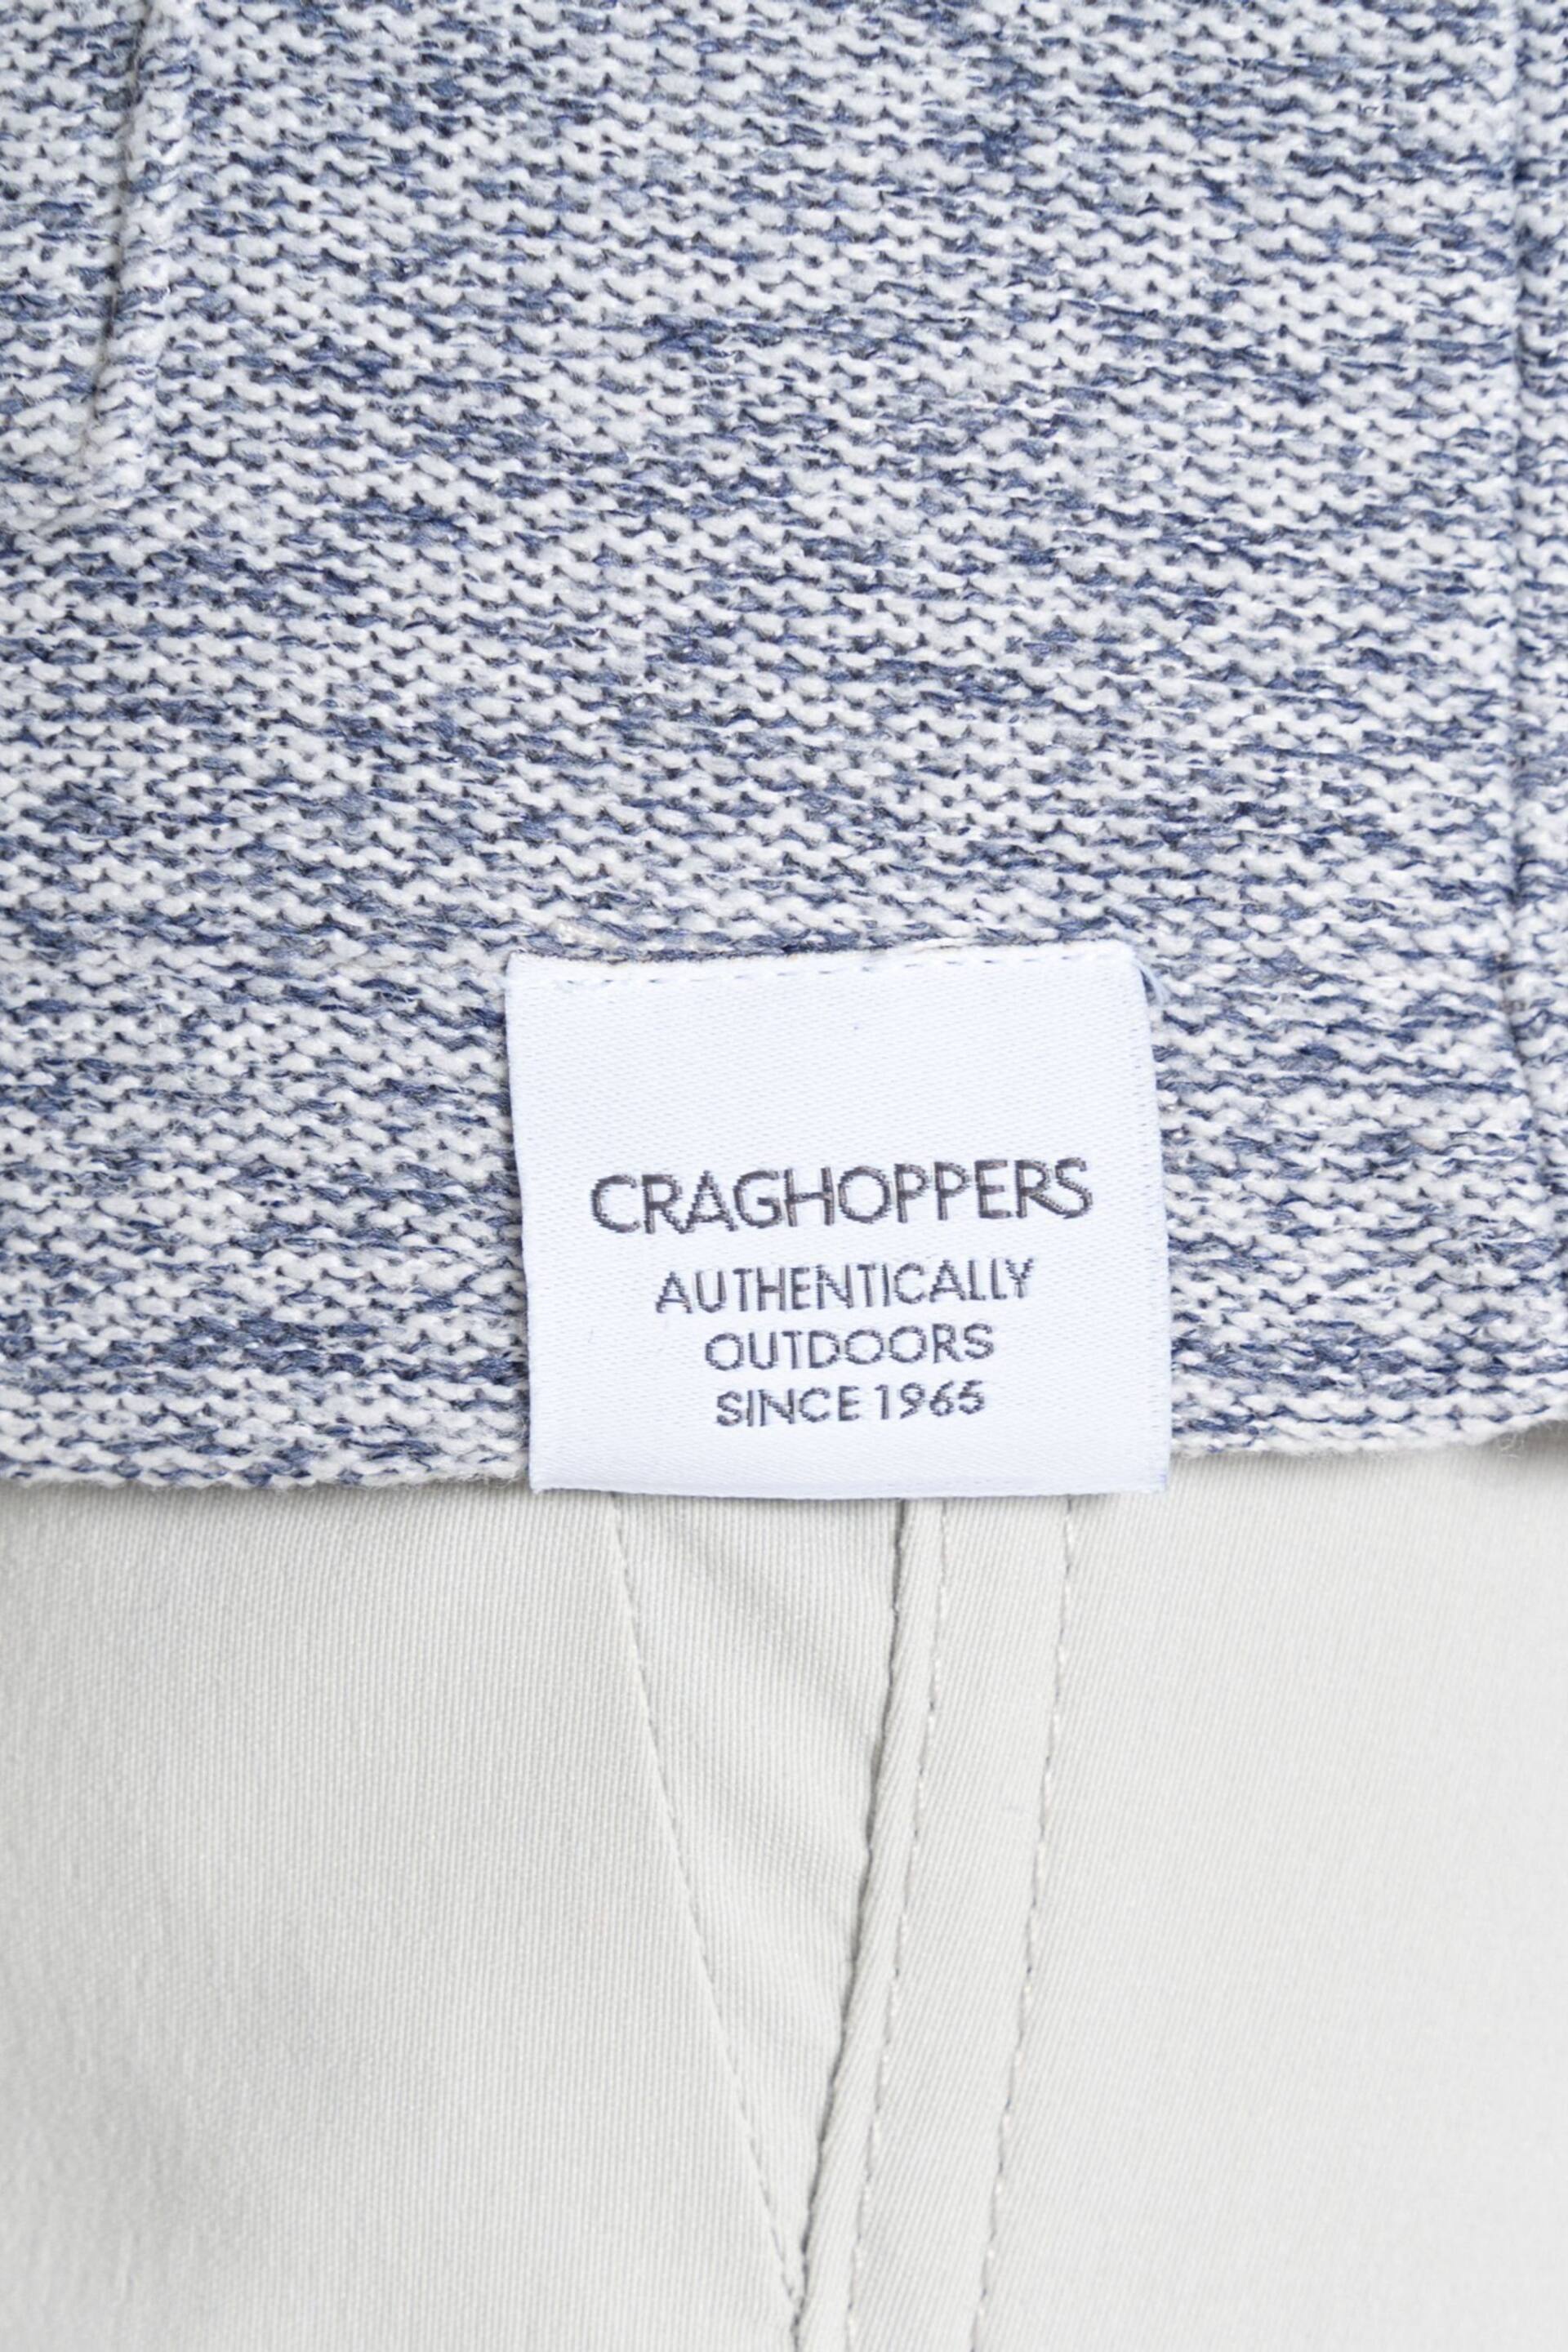 Craghoppers Blue Aio Fleece - Image 6 of 7